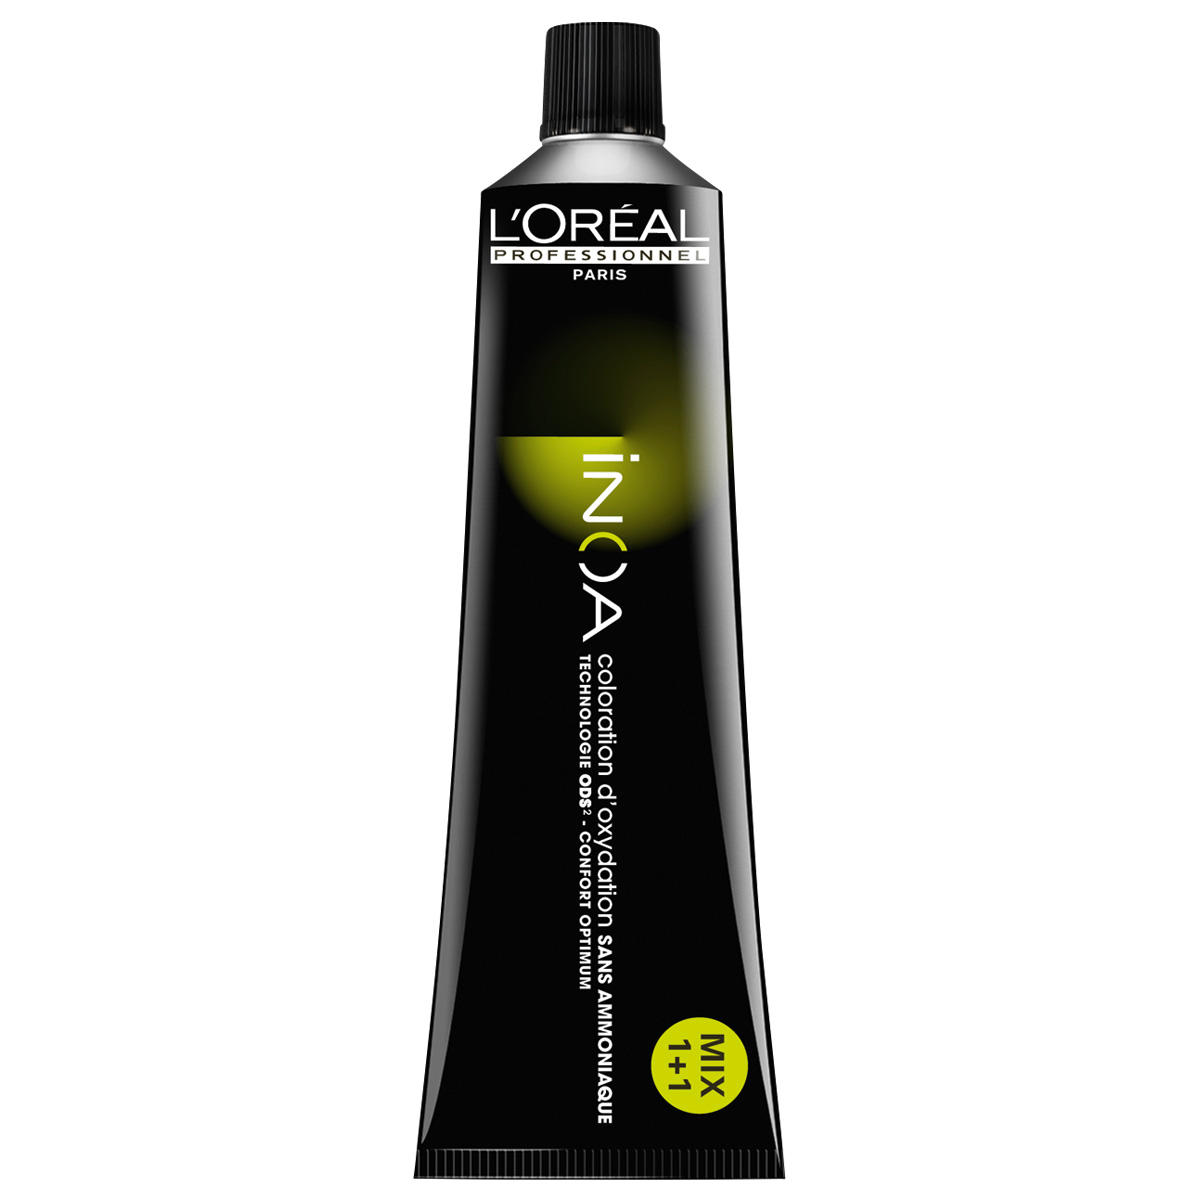 L'Oréal Professionnel Paris Coloration 5.8 Marrón claro moca, tubo 60 ml